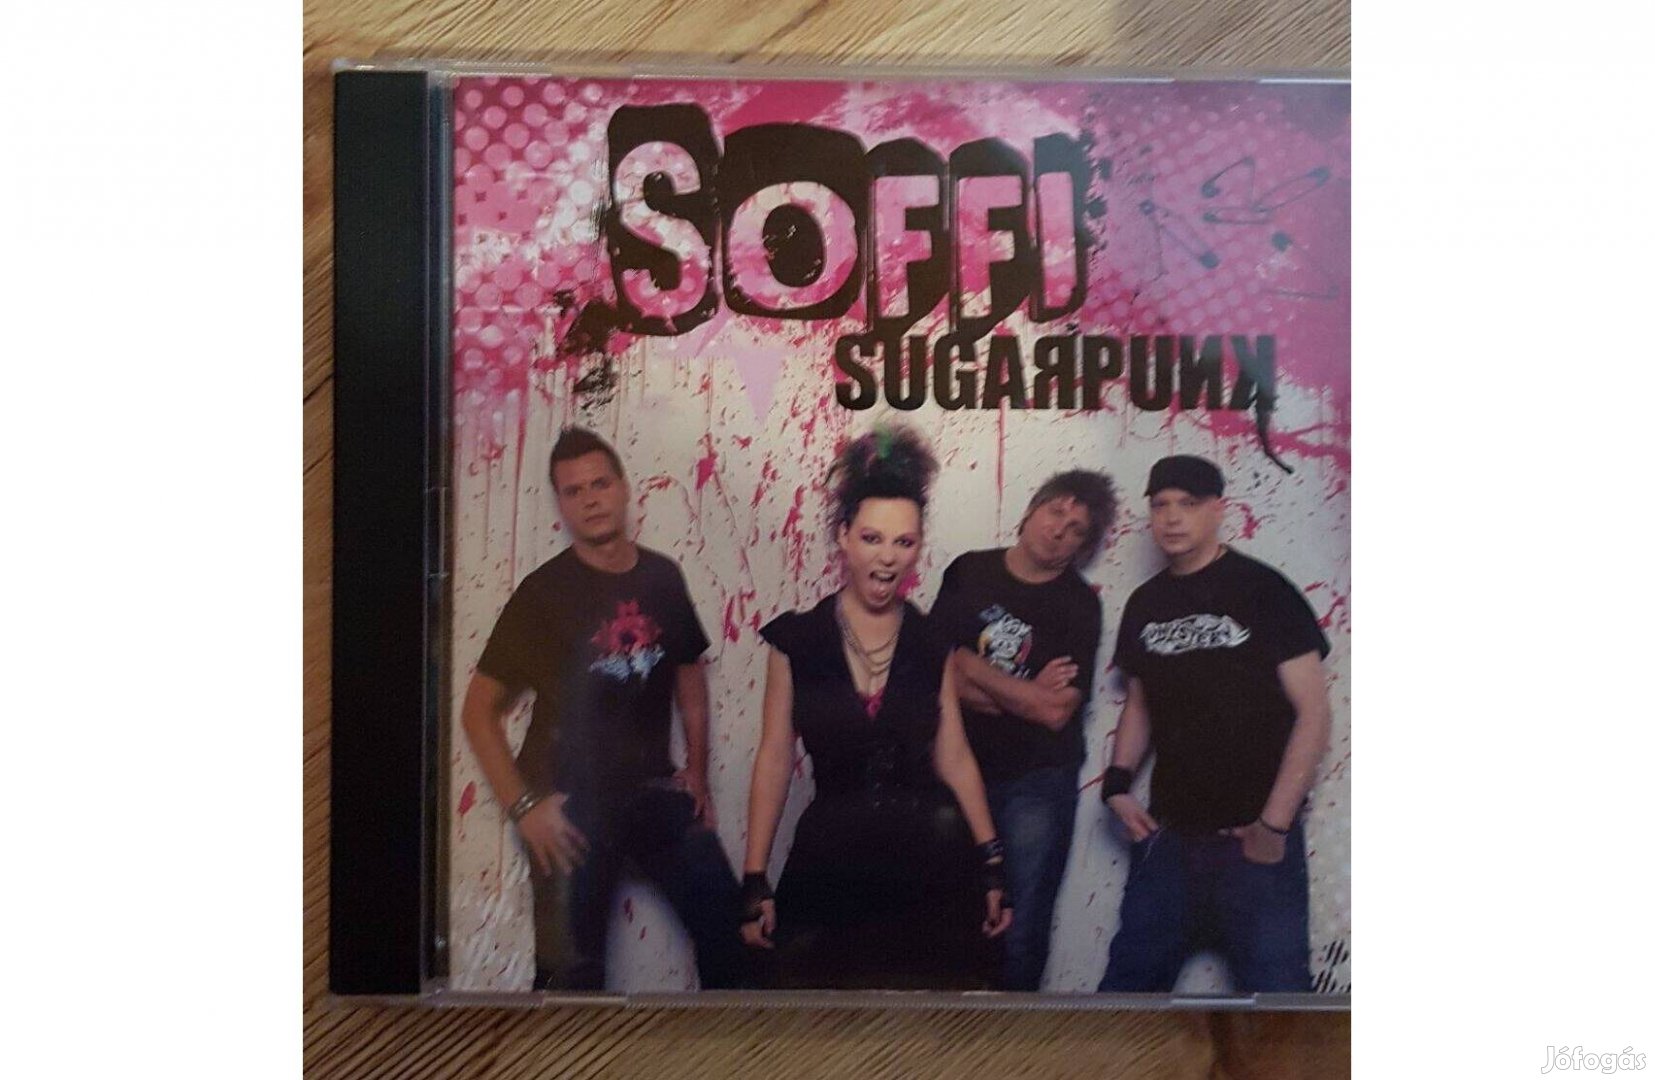 Soffi - Sugarpunk CD